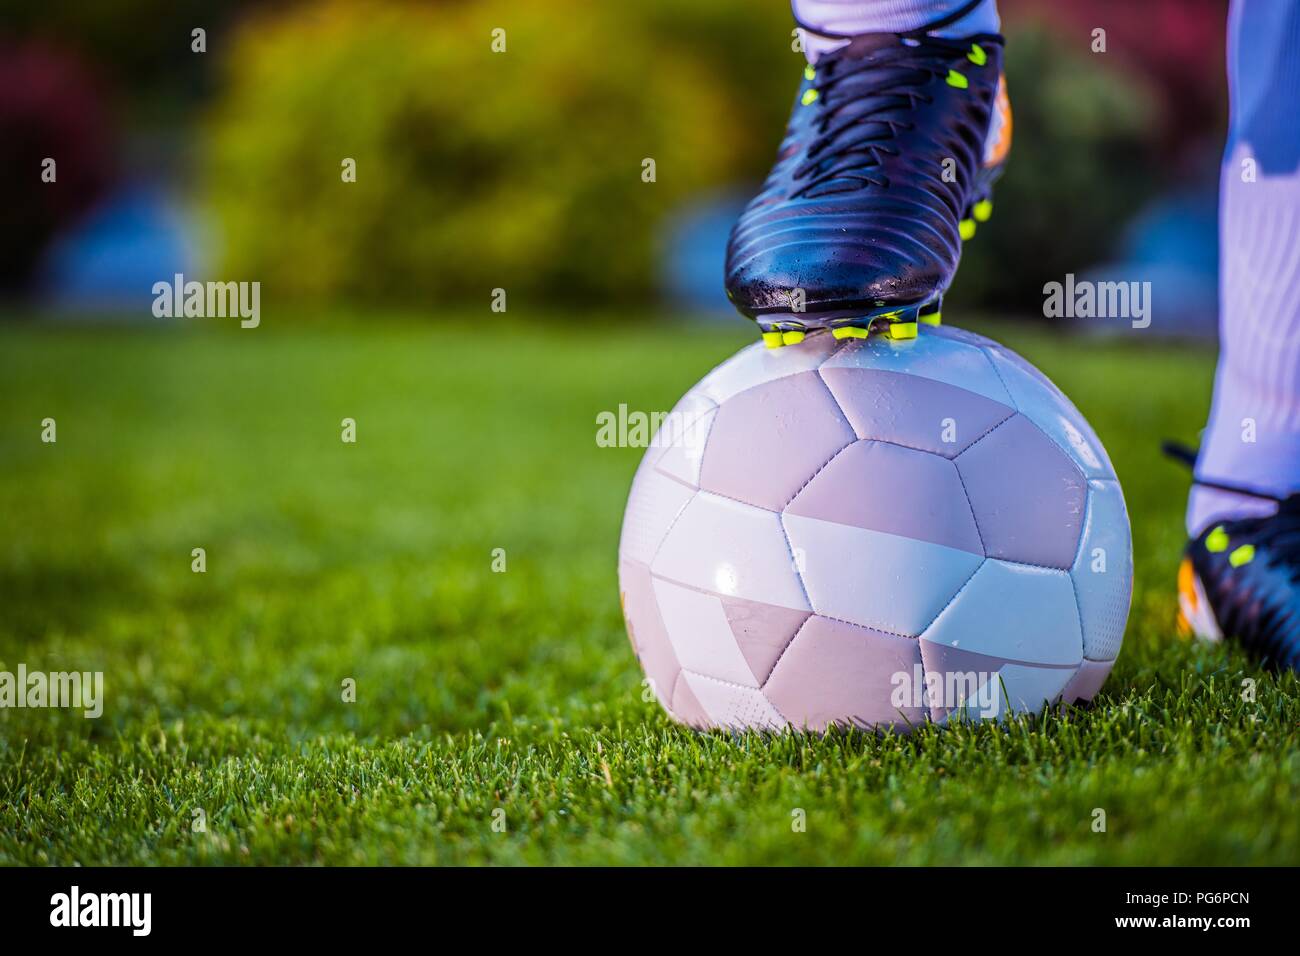 Soccer Football Player Keeping Cleat on the Ball. Closeup Photo. European Football Theme. Stock Photo